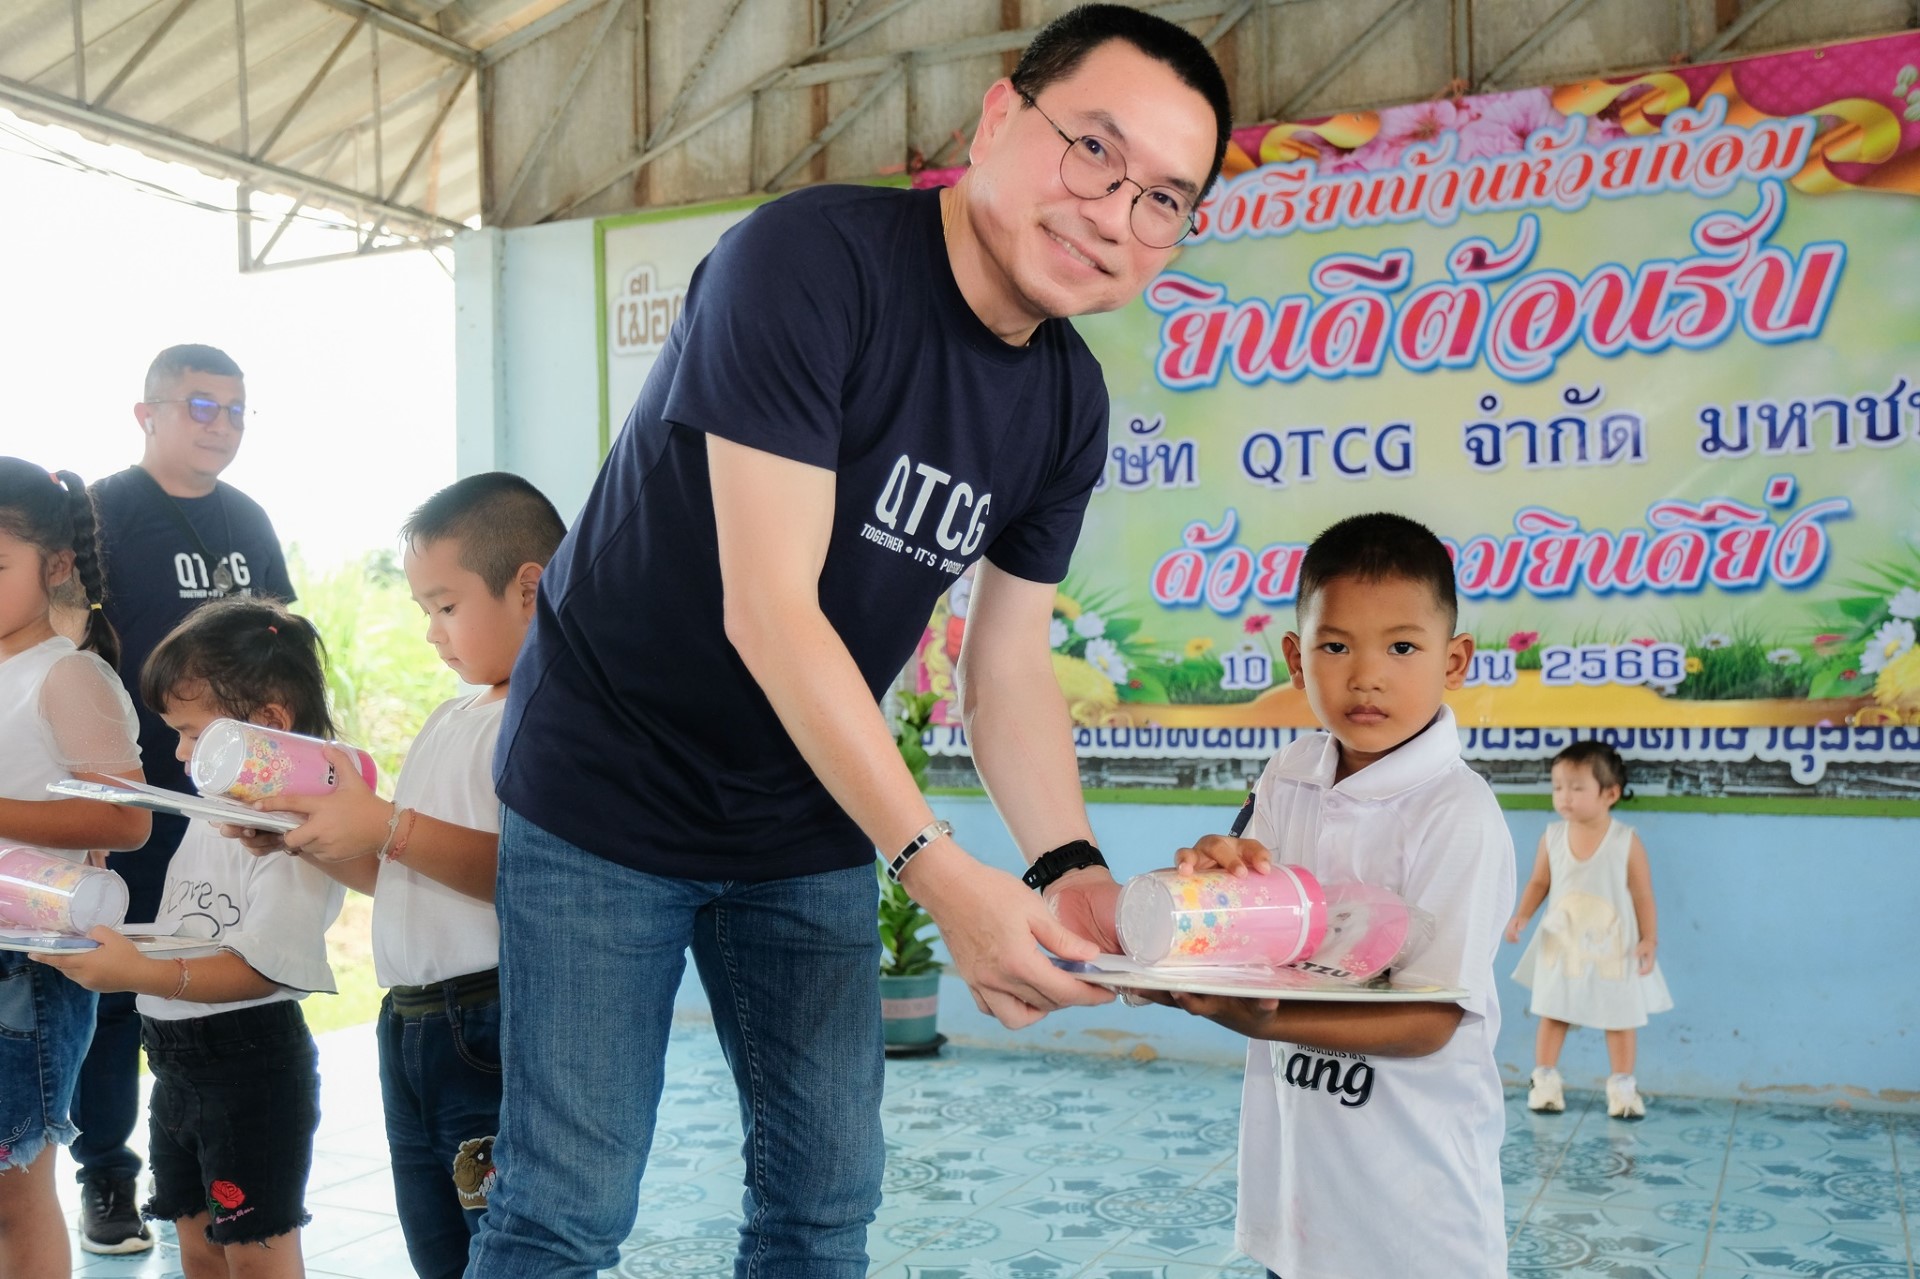 QTCG สร้างโอกาสทางการศึกษาไทยภายใต้โครงการ “คิวทีซีจีจากพี่สู่น้อง”